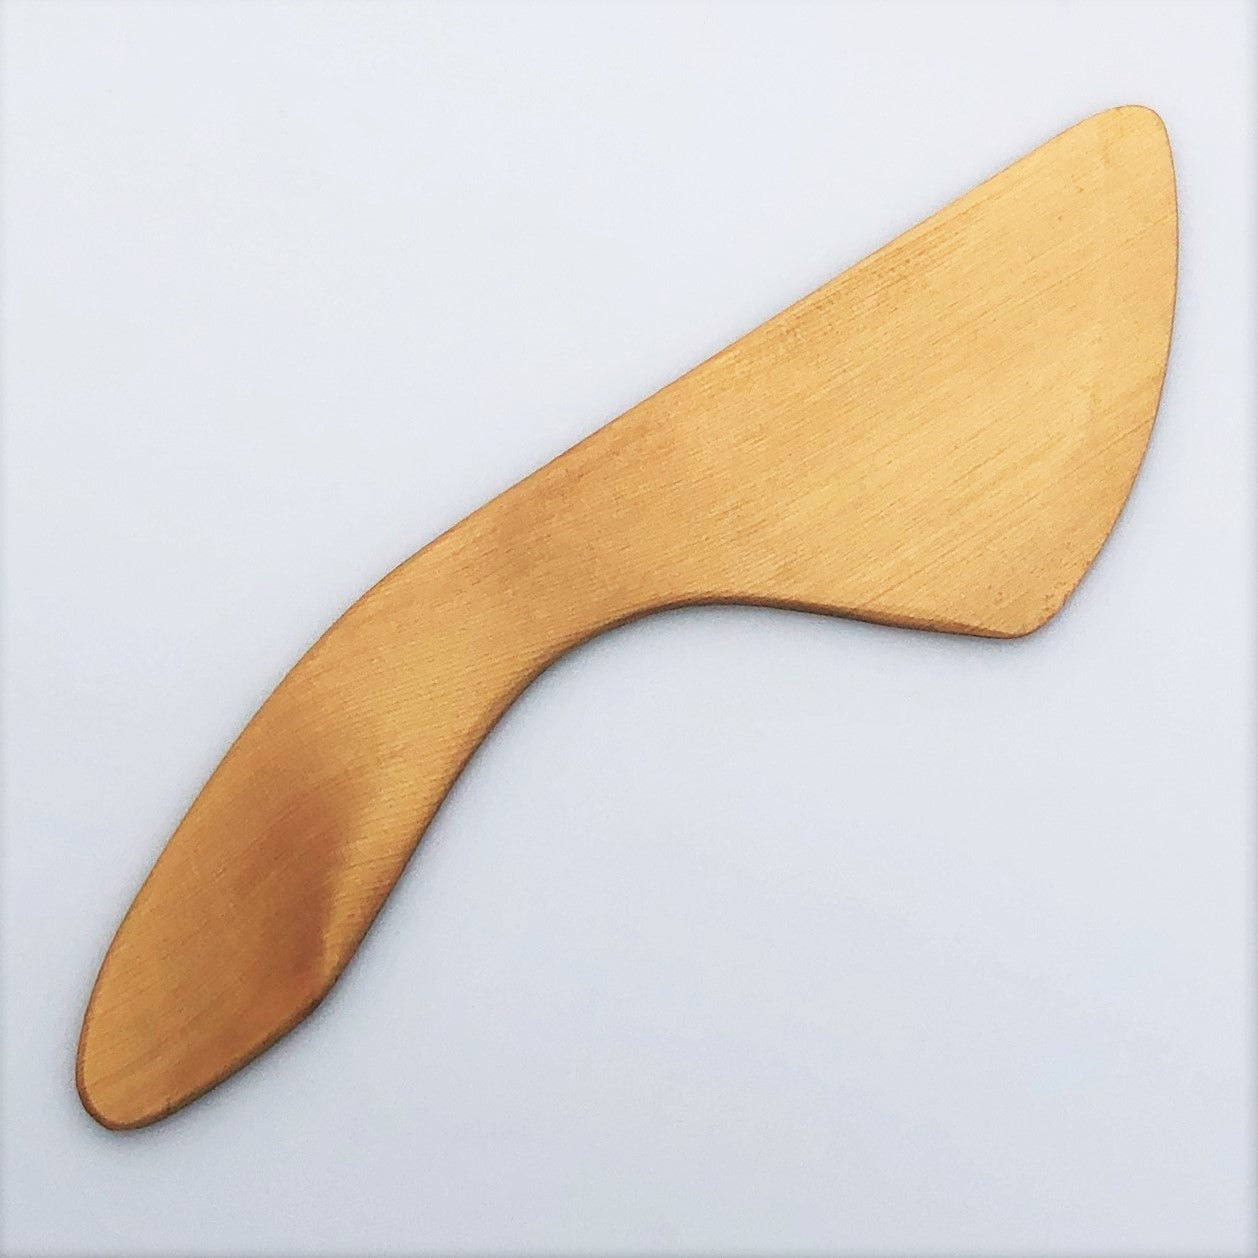 Spreader / Knife - Huon Pine "Levitin"